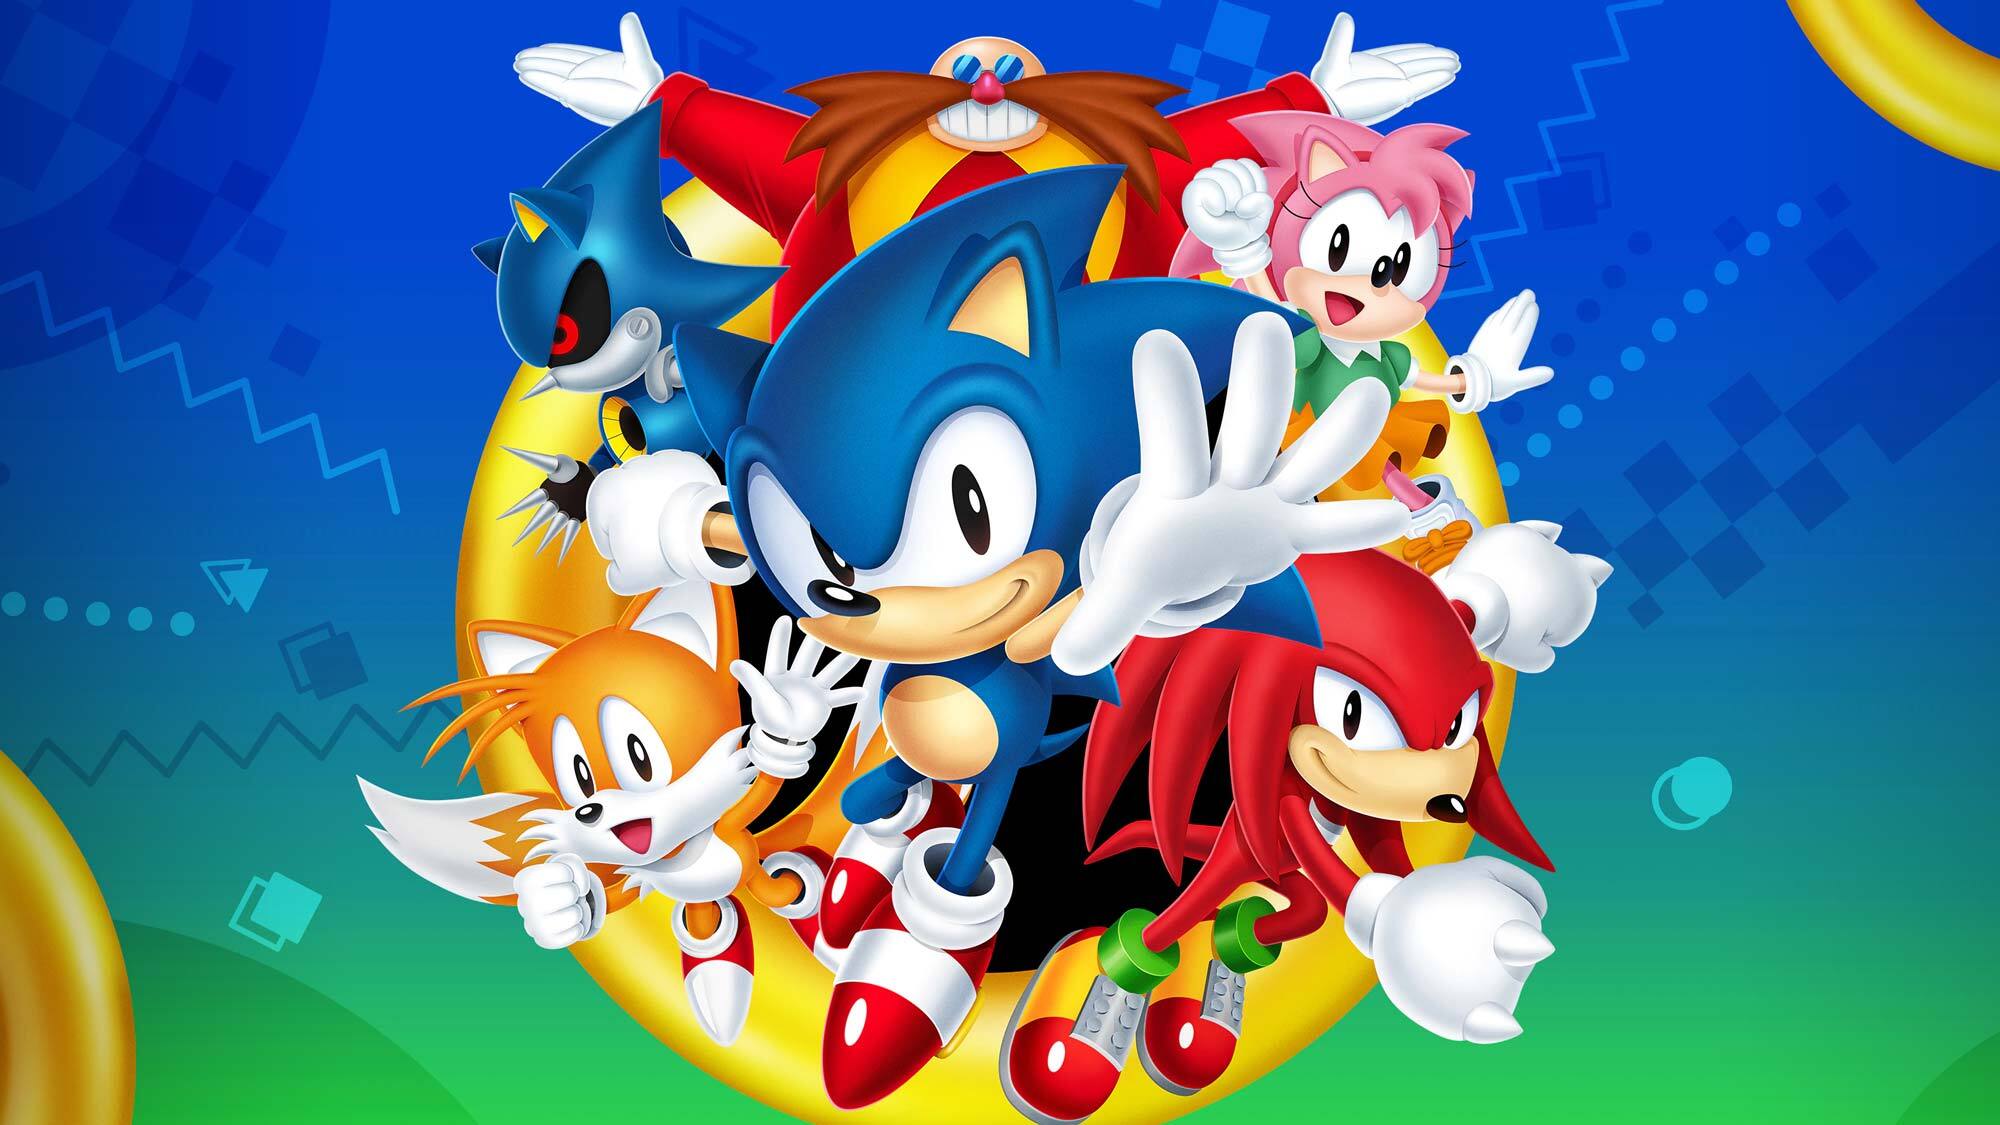 HOW TO PLAY Sonic the Hedgehog 3 (Genesis) on iPhone, iPad, iPod, iOS